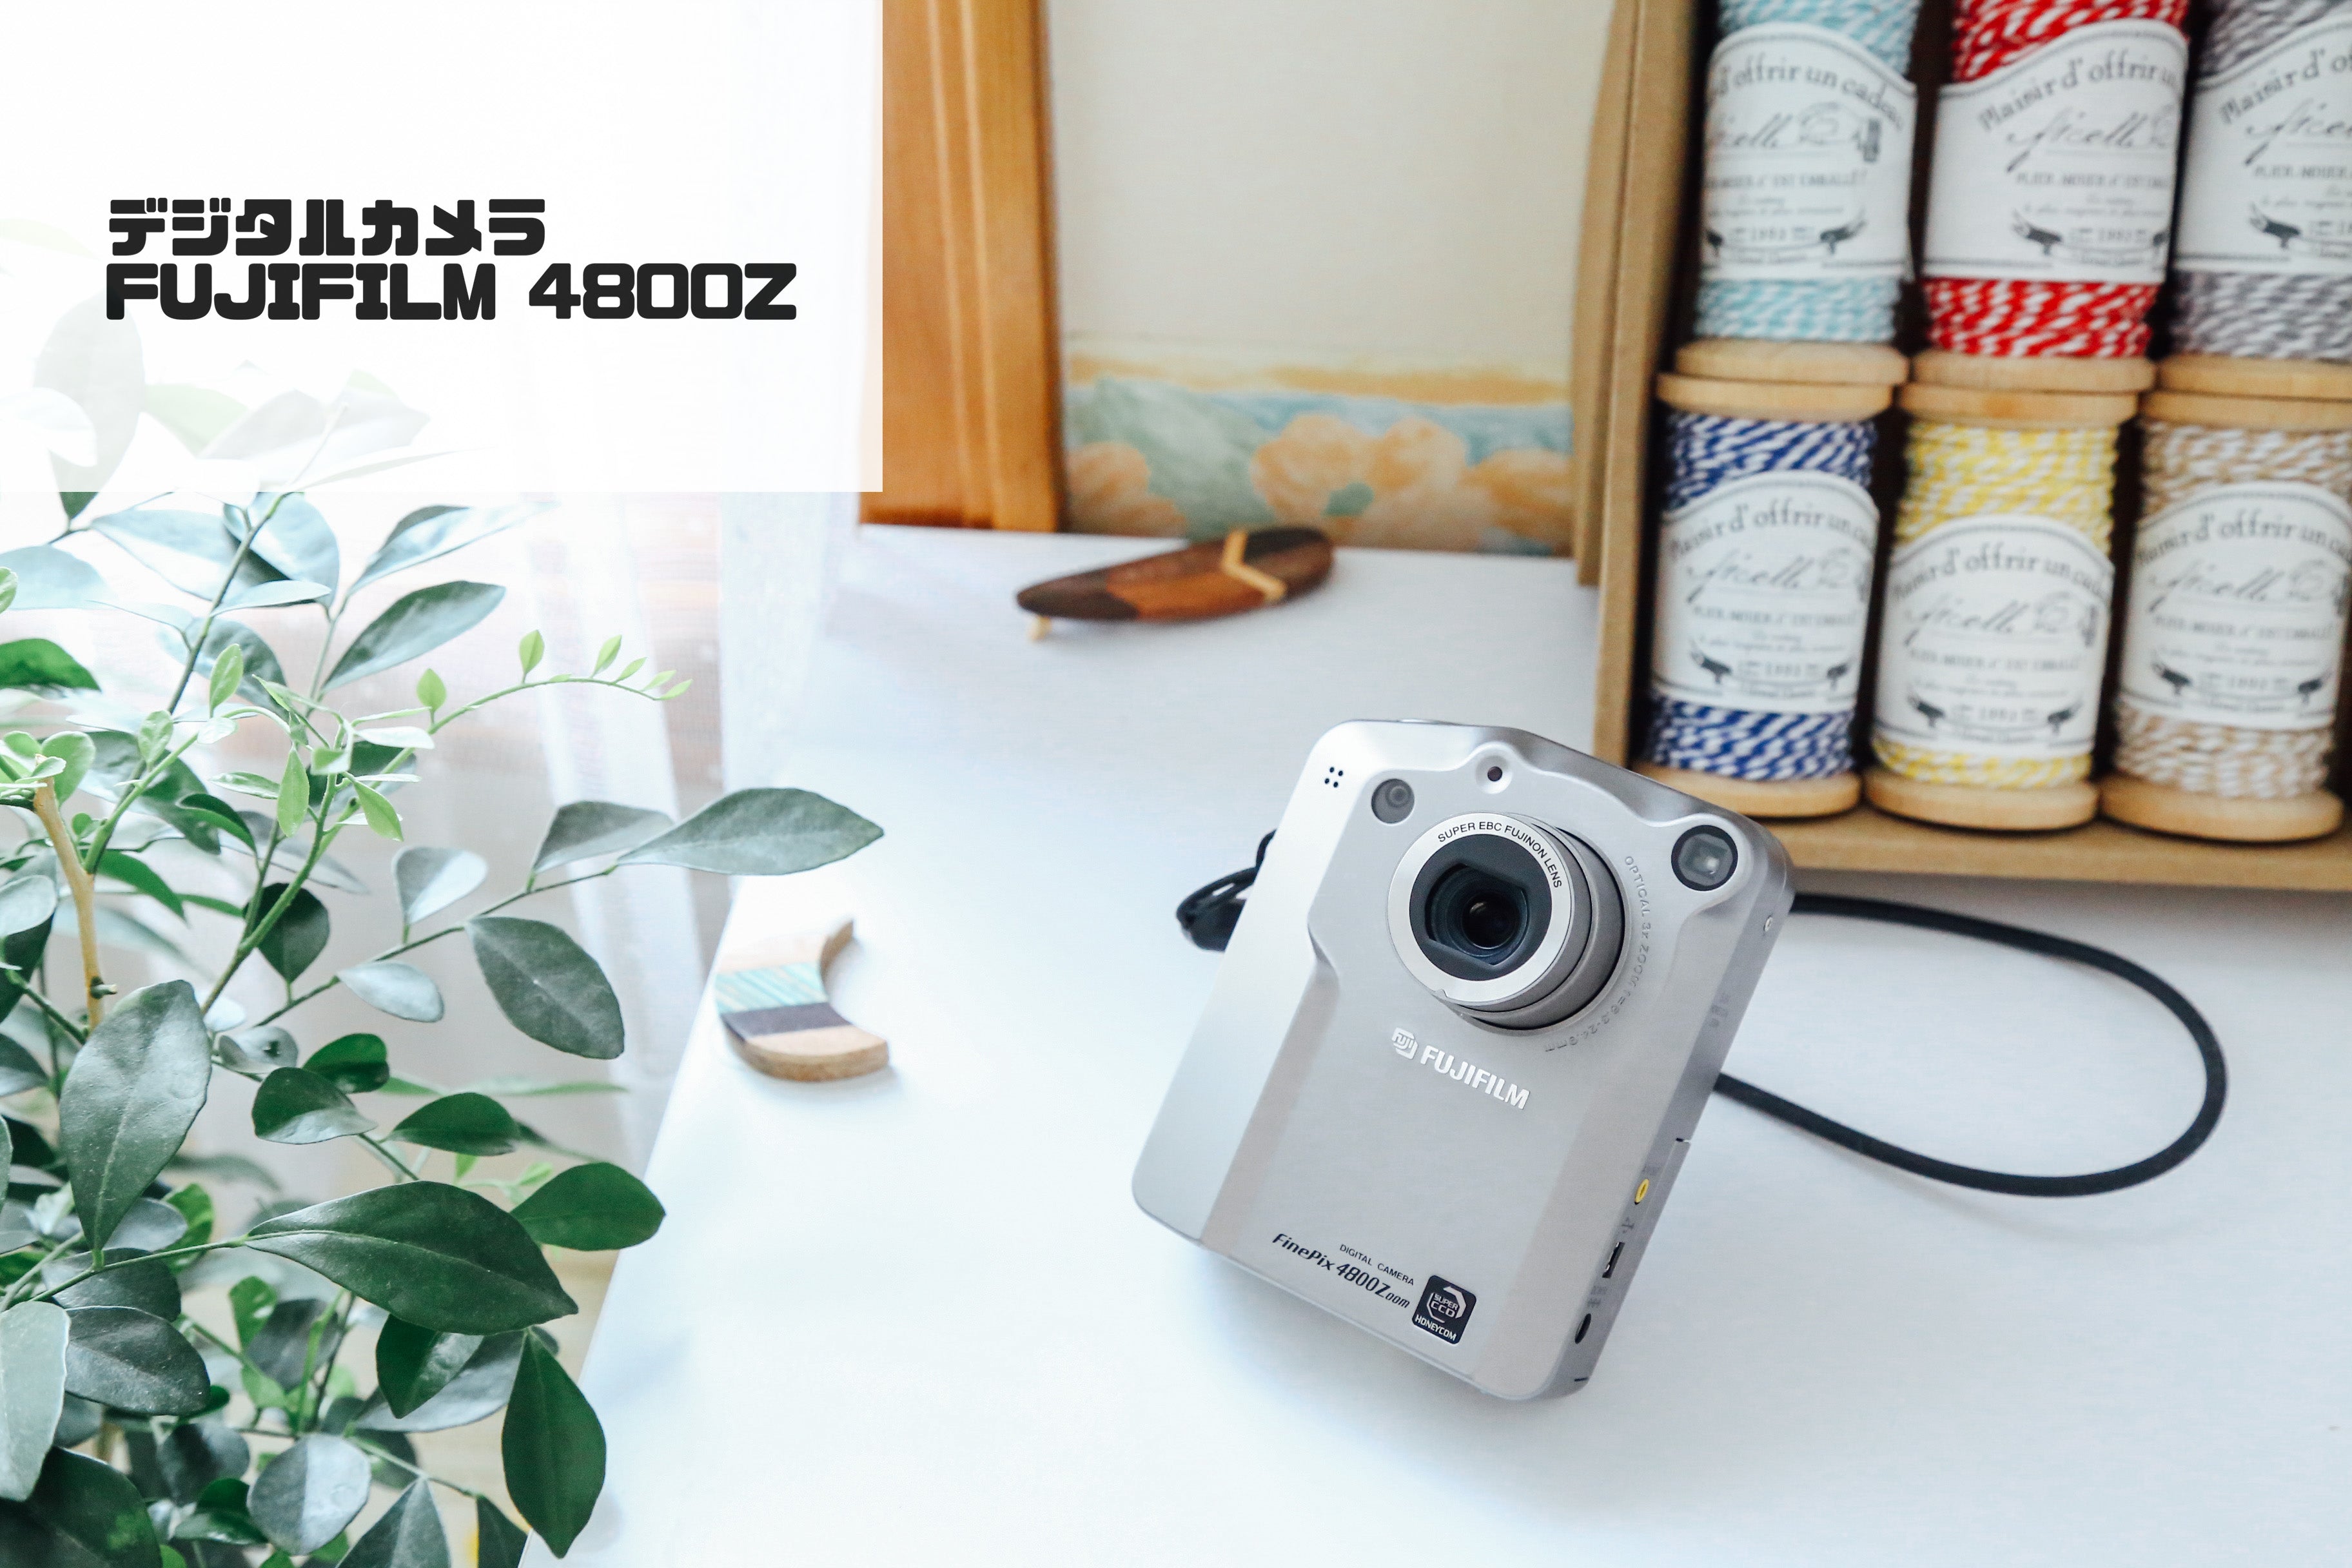 FUJIFILM FinePix 4800z [Finally working item] [Live action taken❗️] [Rare✨]  ▪️ Old compact digital camera ▪️ Digital camera